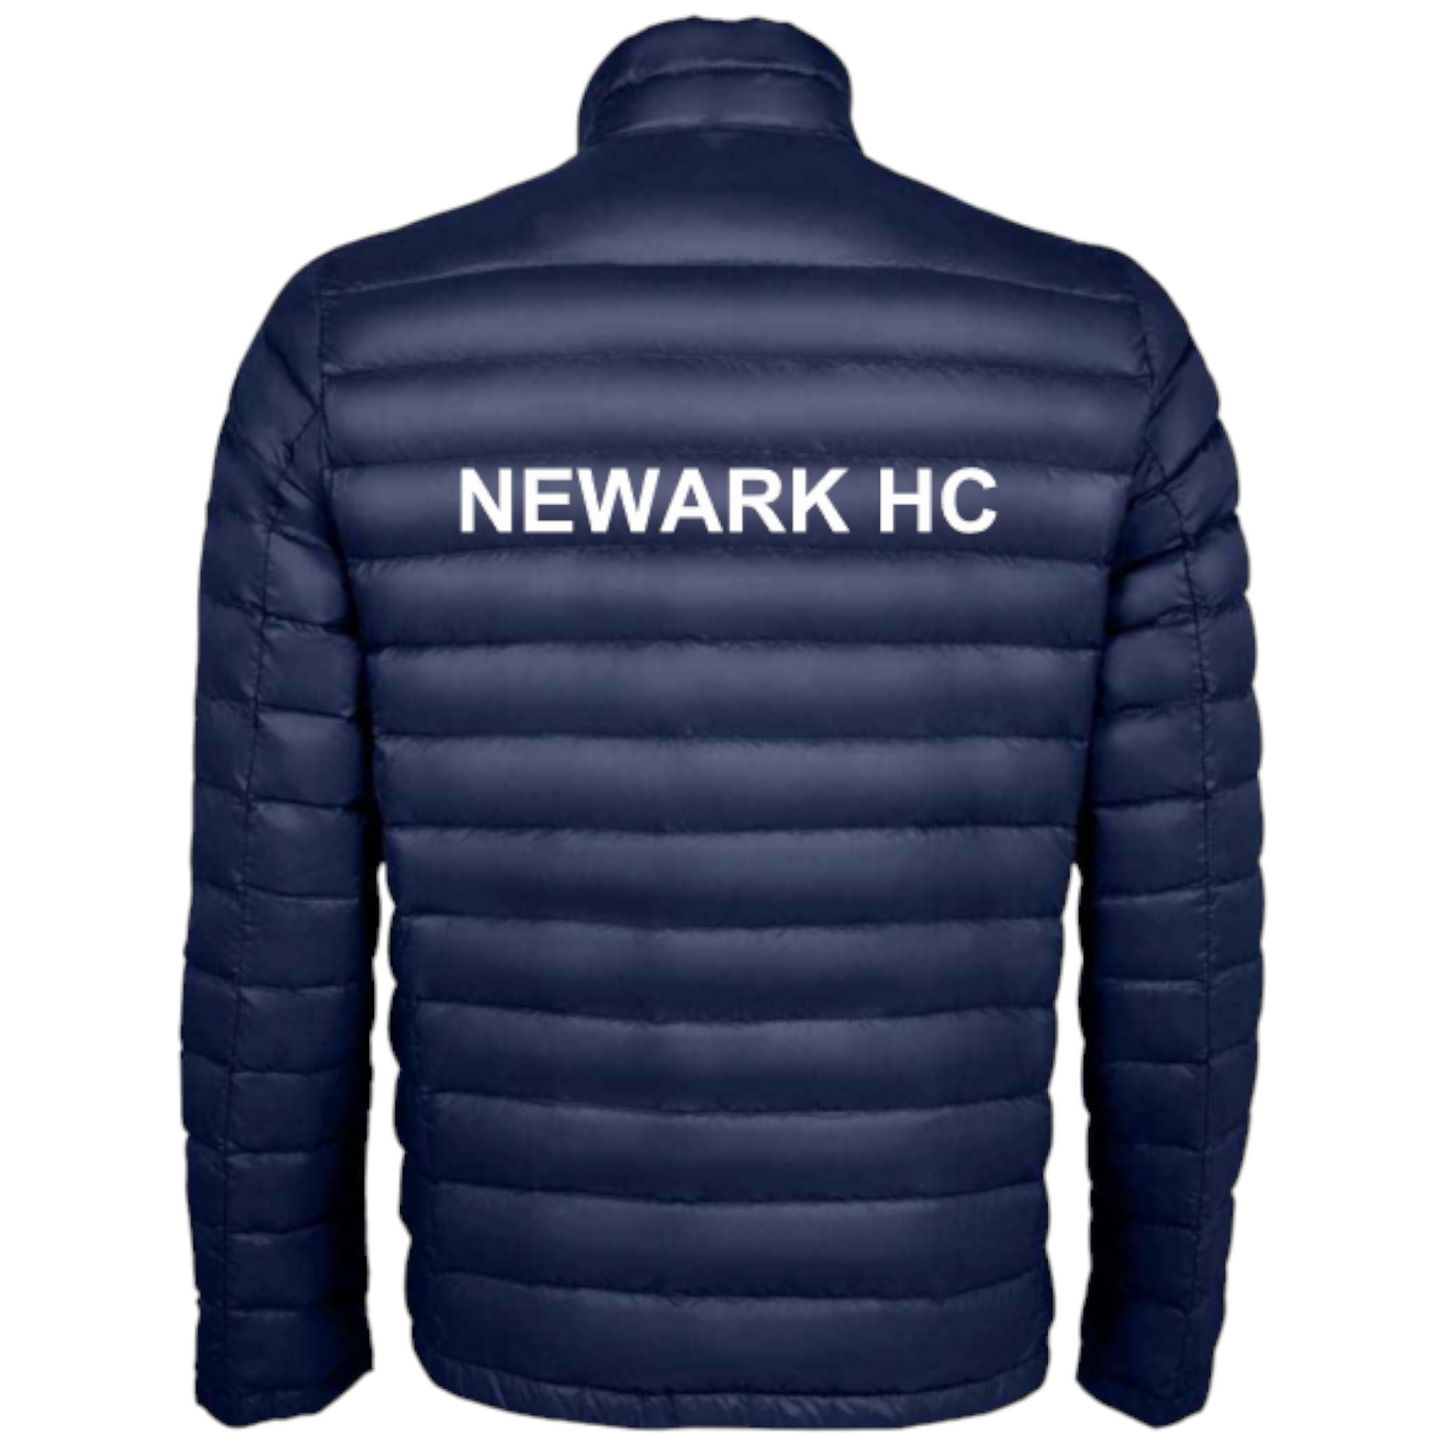 Newark HC Womens Down Feel Jacket